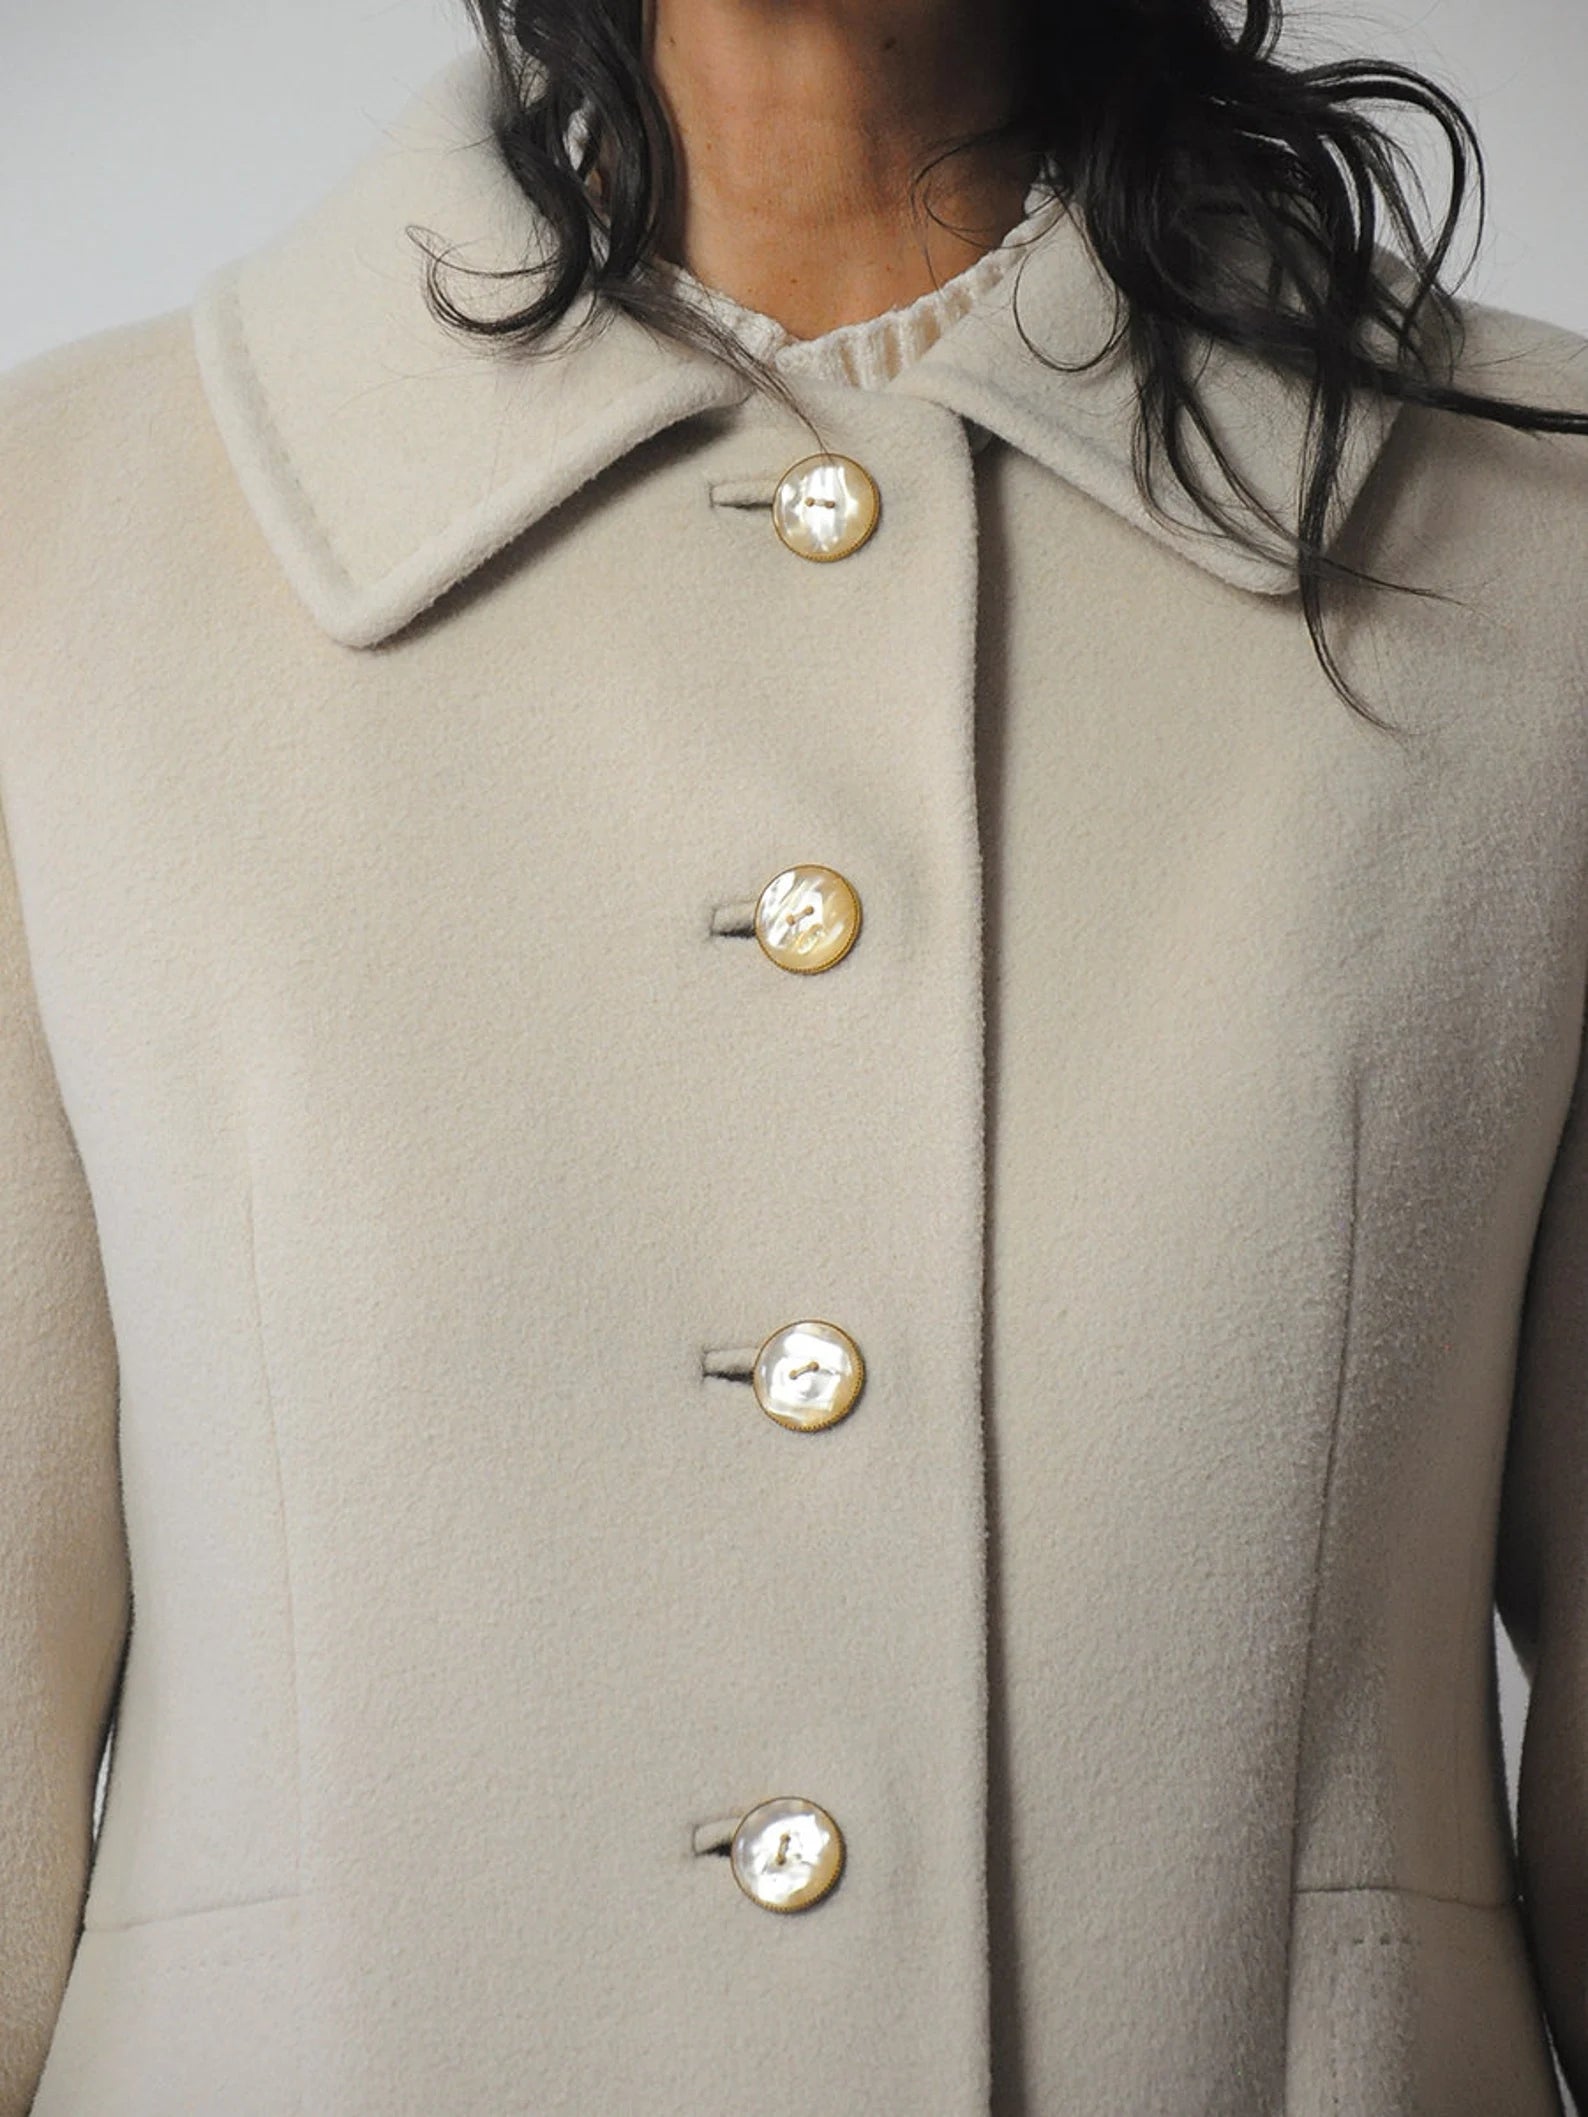 1960's Vanilla Cashmere Coat